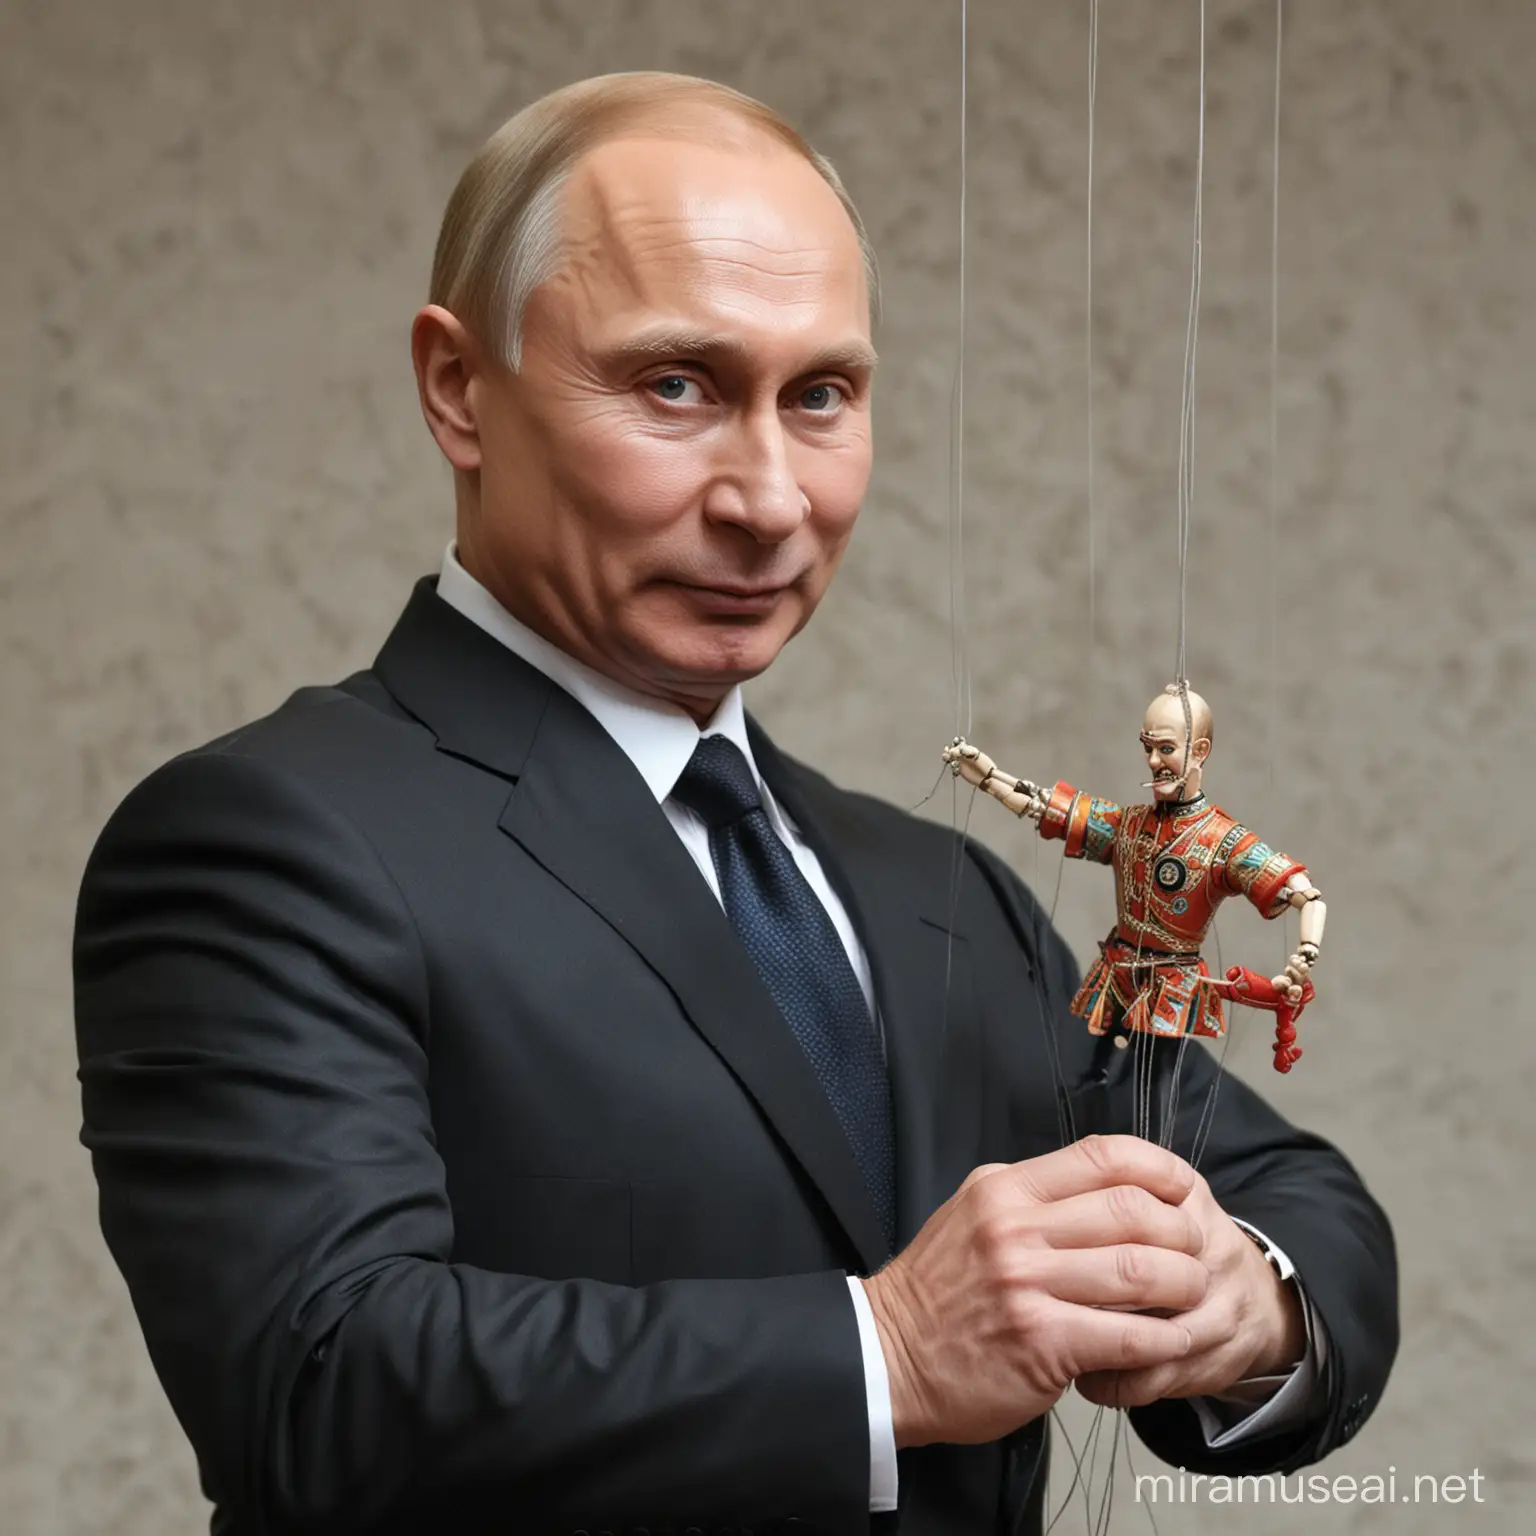 Vladimir Putin Controlling Marionette Strings